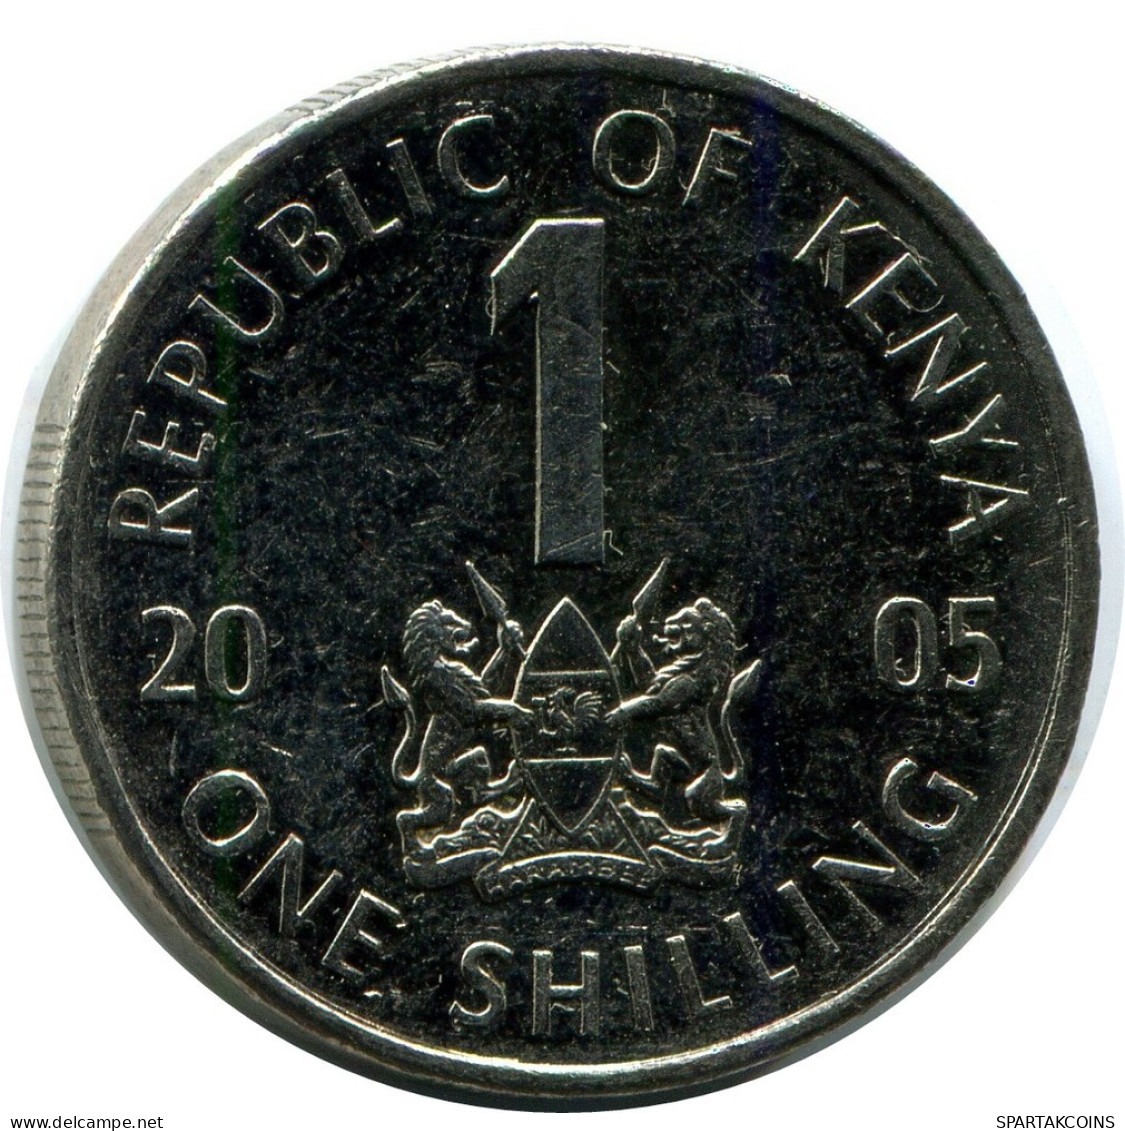 1 SHILLING 2005 KENYA Coin #AP896.U.A - Kenia